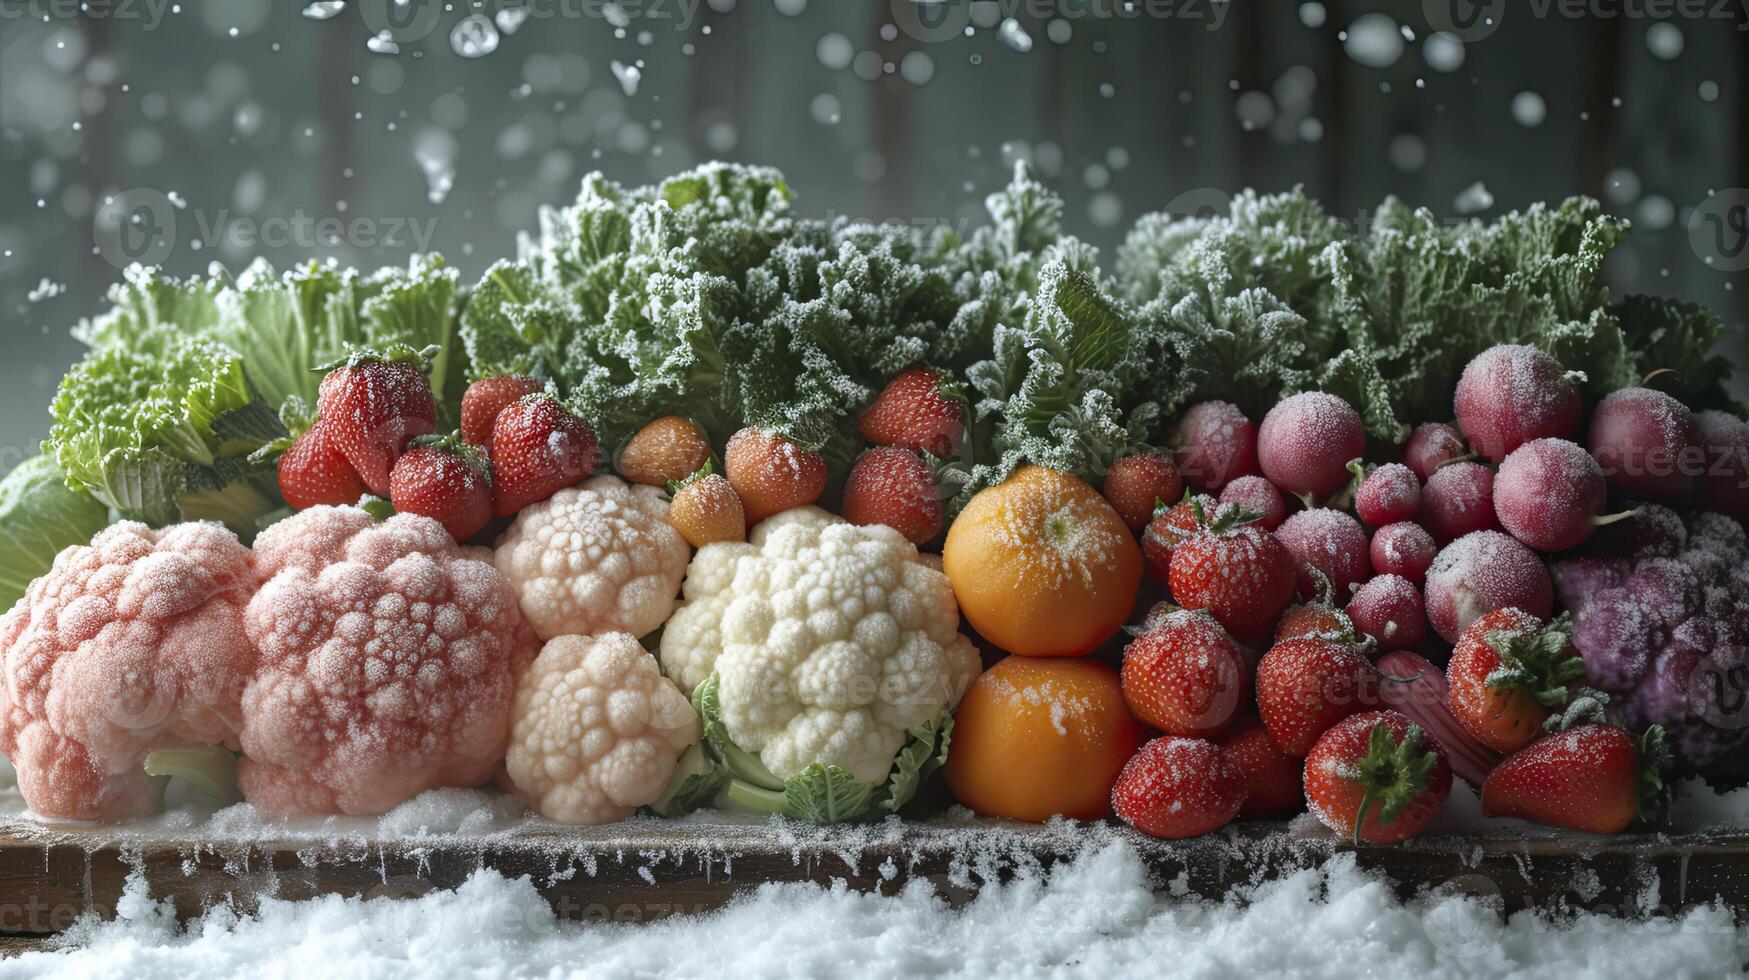 ai gegenereerd bevroren groenten detailopname foto